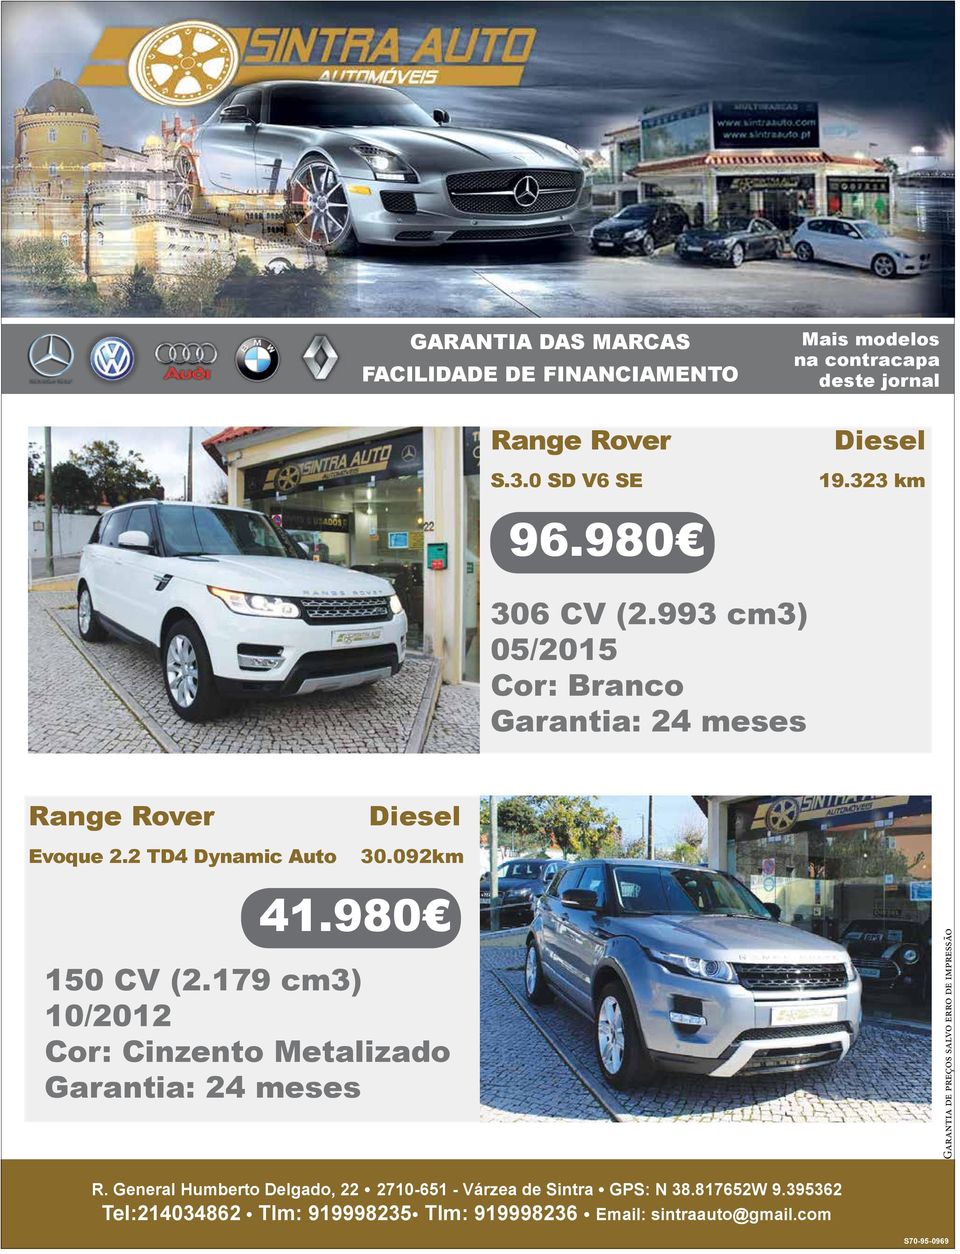 993 cm3) 05/2015 Cor: Branco Garantia: 24 meses Range Rover Evoque 2.2 TD4 Dynamic Auto Diesel 30.092km 41.980 150 CV (2.